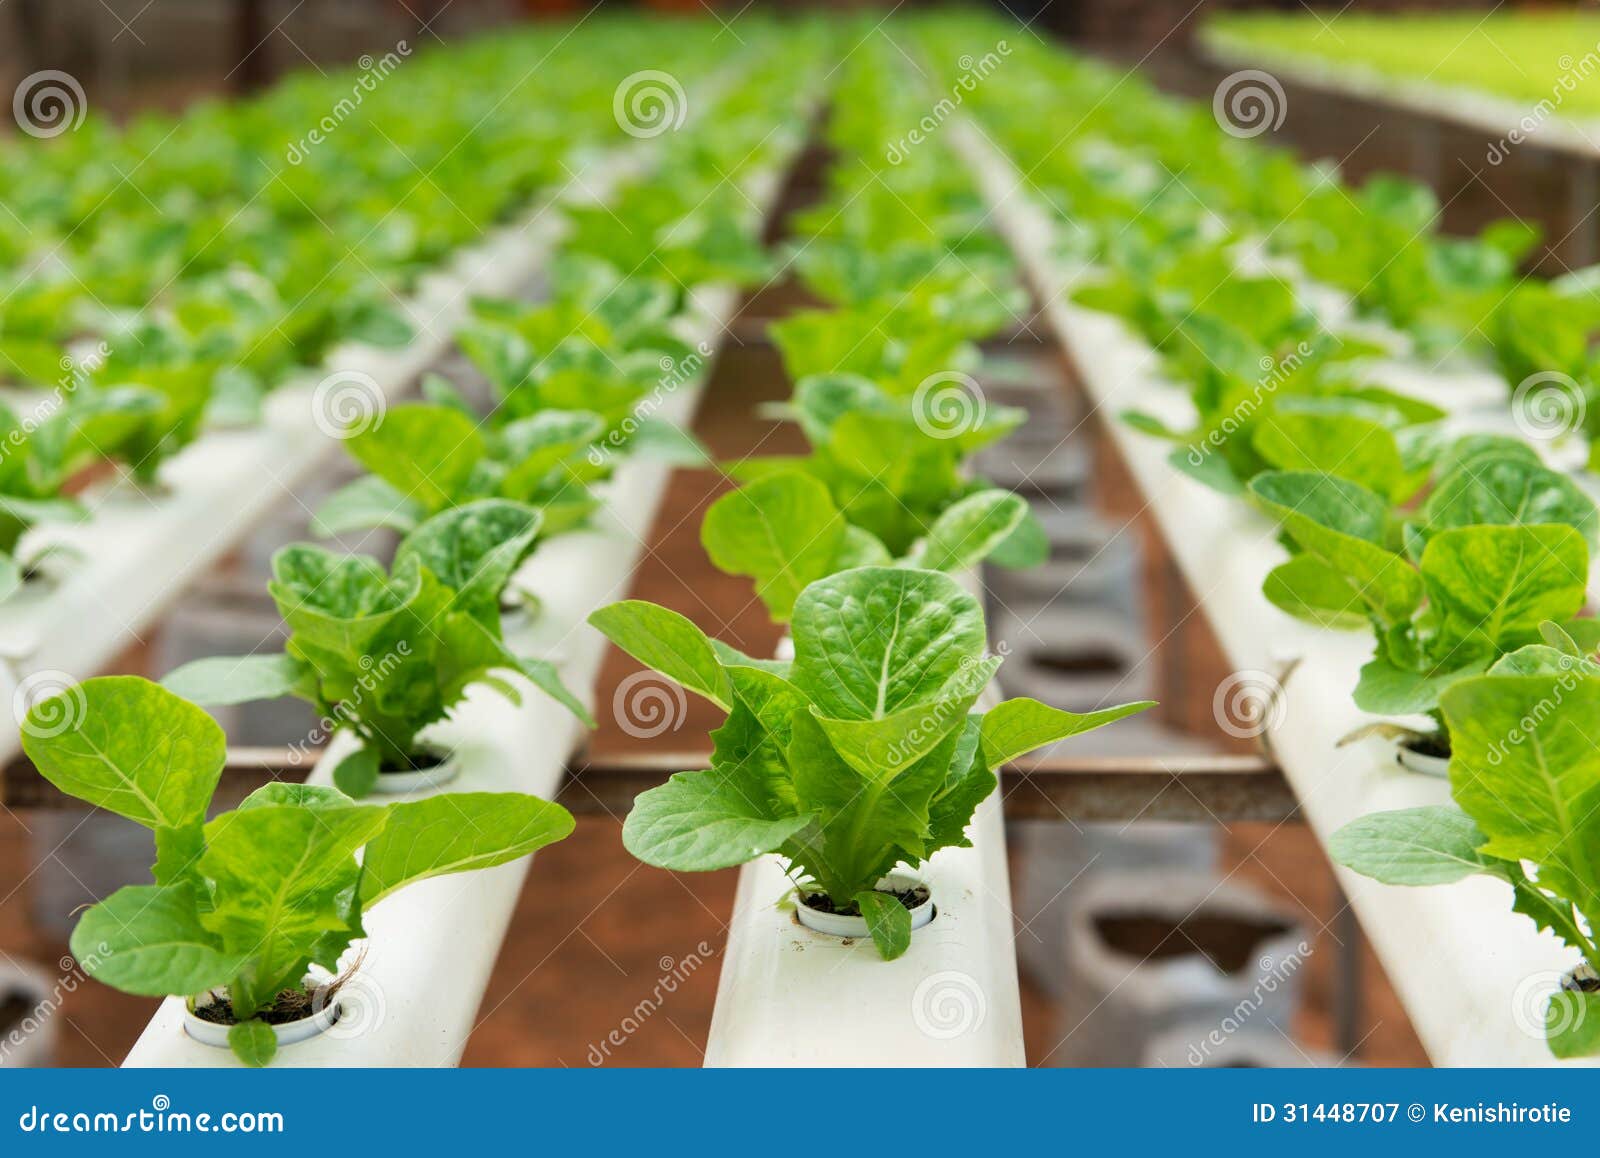 Hydroponic vegetable stock image. Image of lettuce, development - 31448707